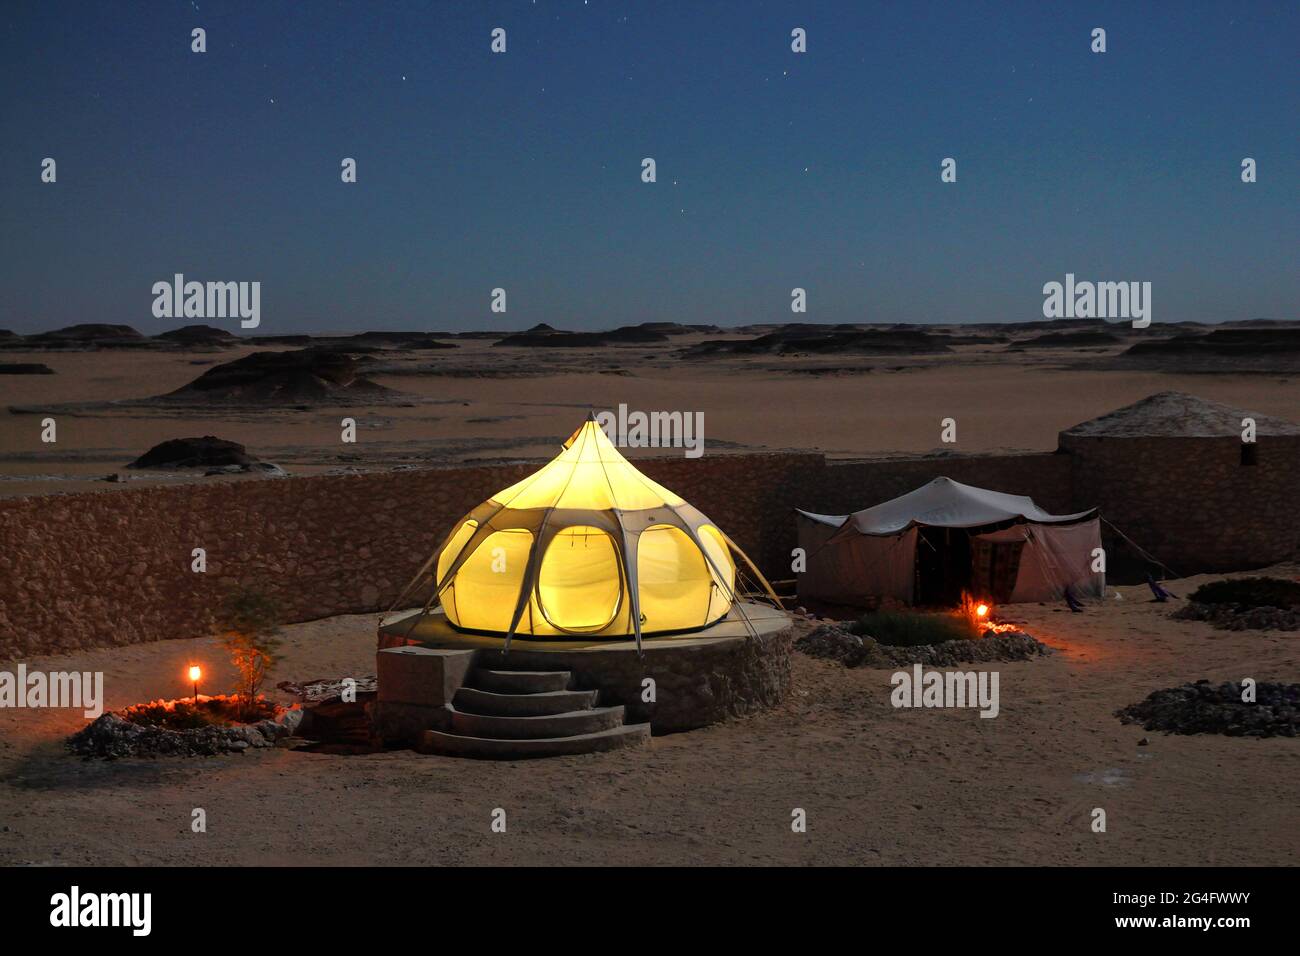 Bedouin camp during night in Siwa Oasis Sahara Desert. Credit: Dimitris Aspiotis / Alamy Stock Photo